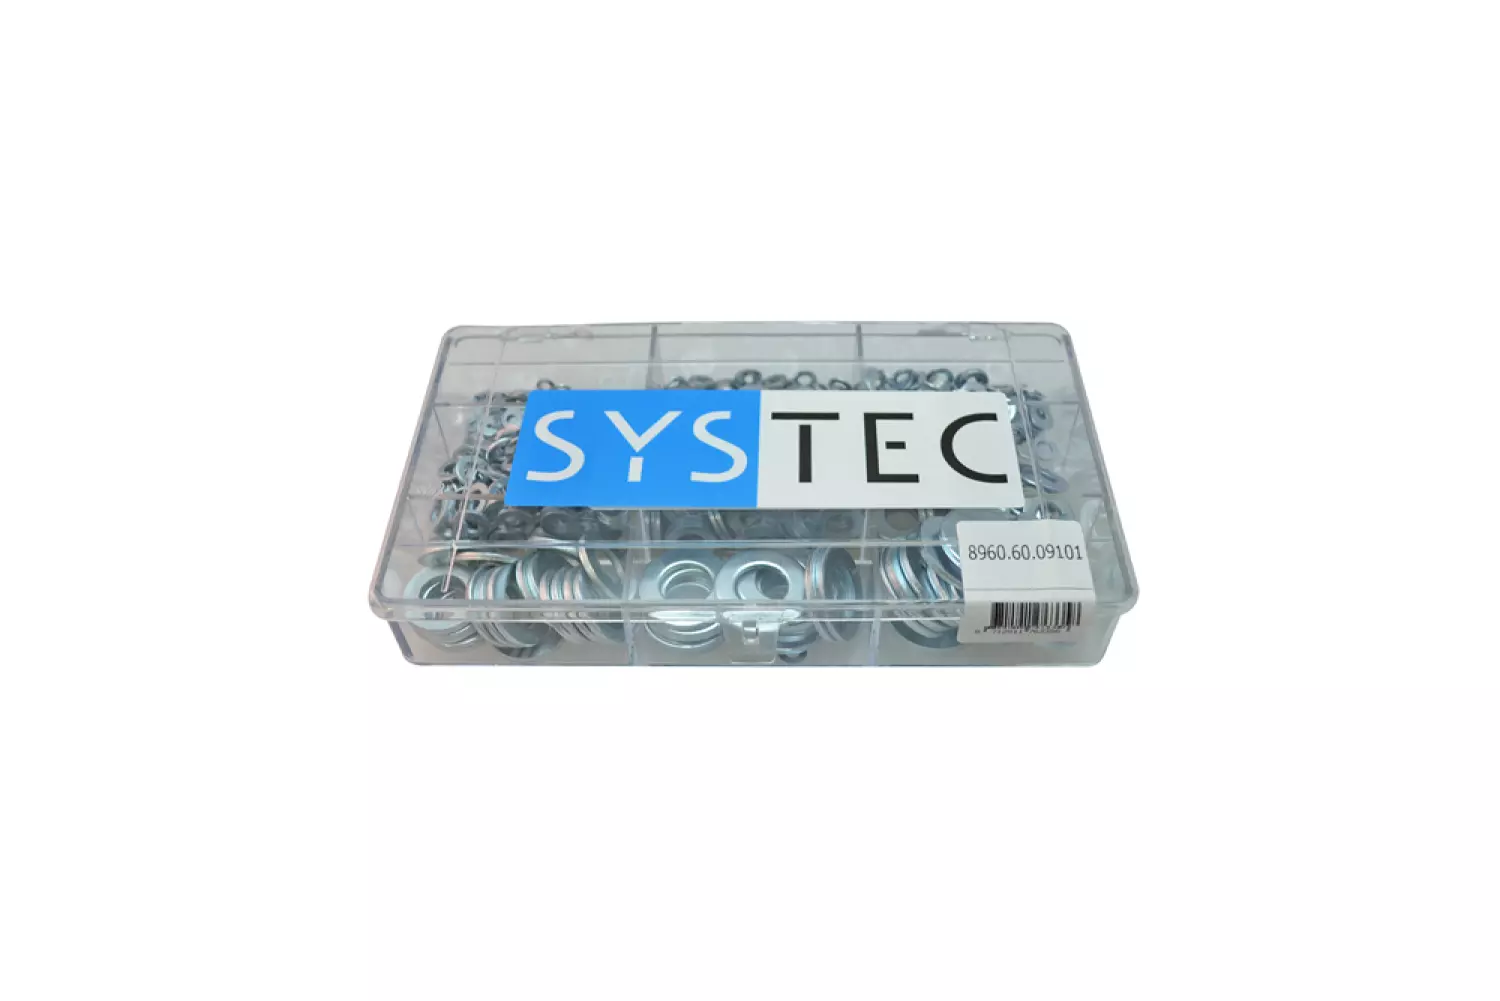 Systec 8960.60.09101 1075-delige Organizer 9-vaks met sluitringen DIN125a verzinkt-image